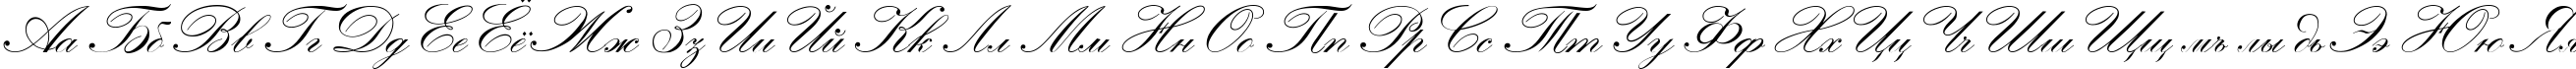 Пример написания русского алфавита шрифтом Heather Script Two